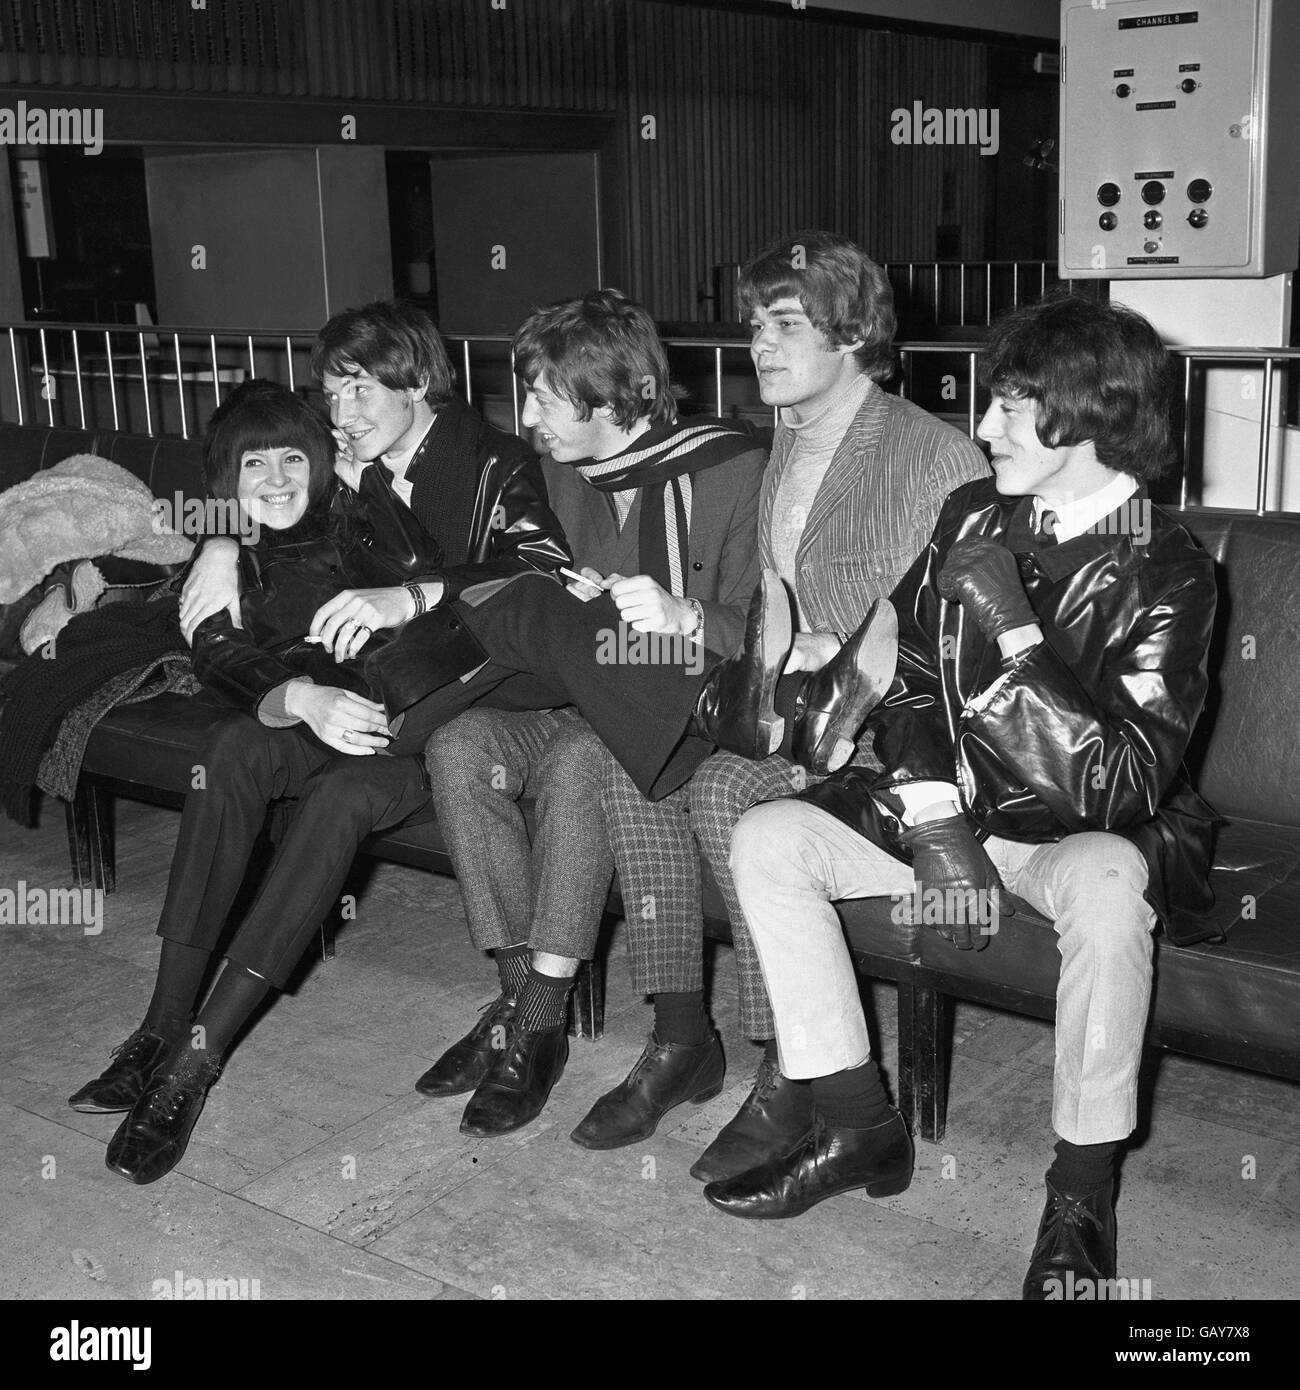 British Pop Music - The 1960's - Beryl Marsden and The Koobas - London Airport - 1965 Stock Photo